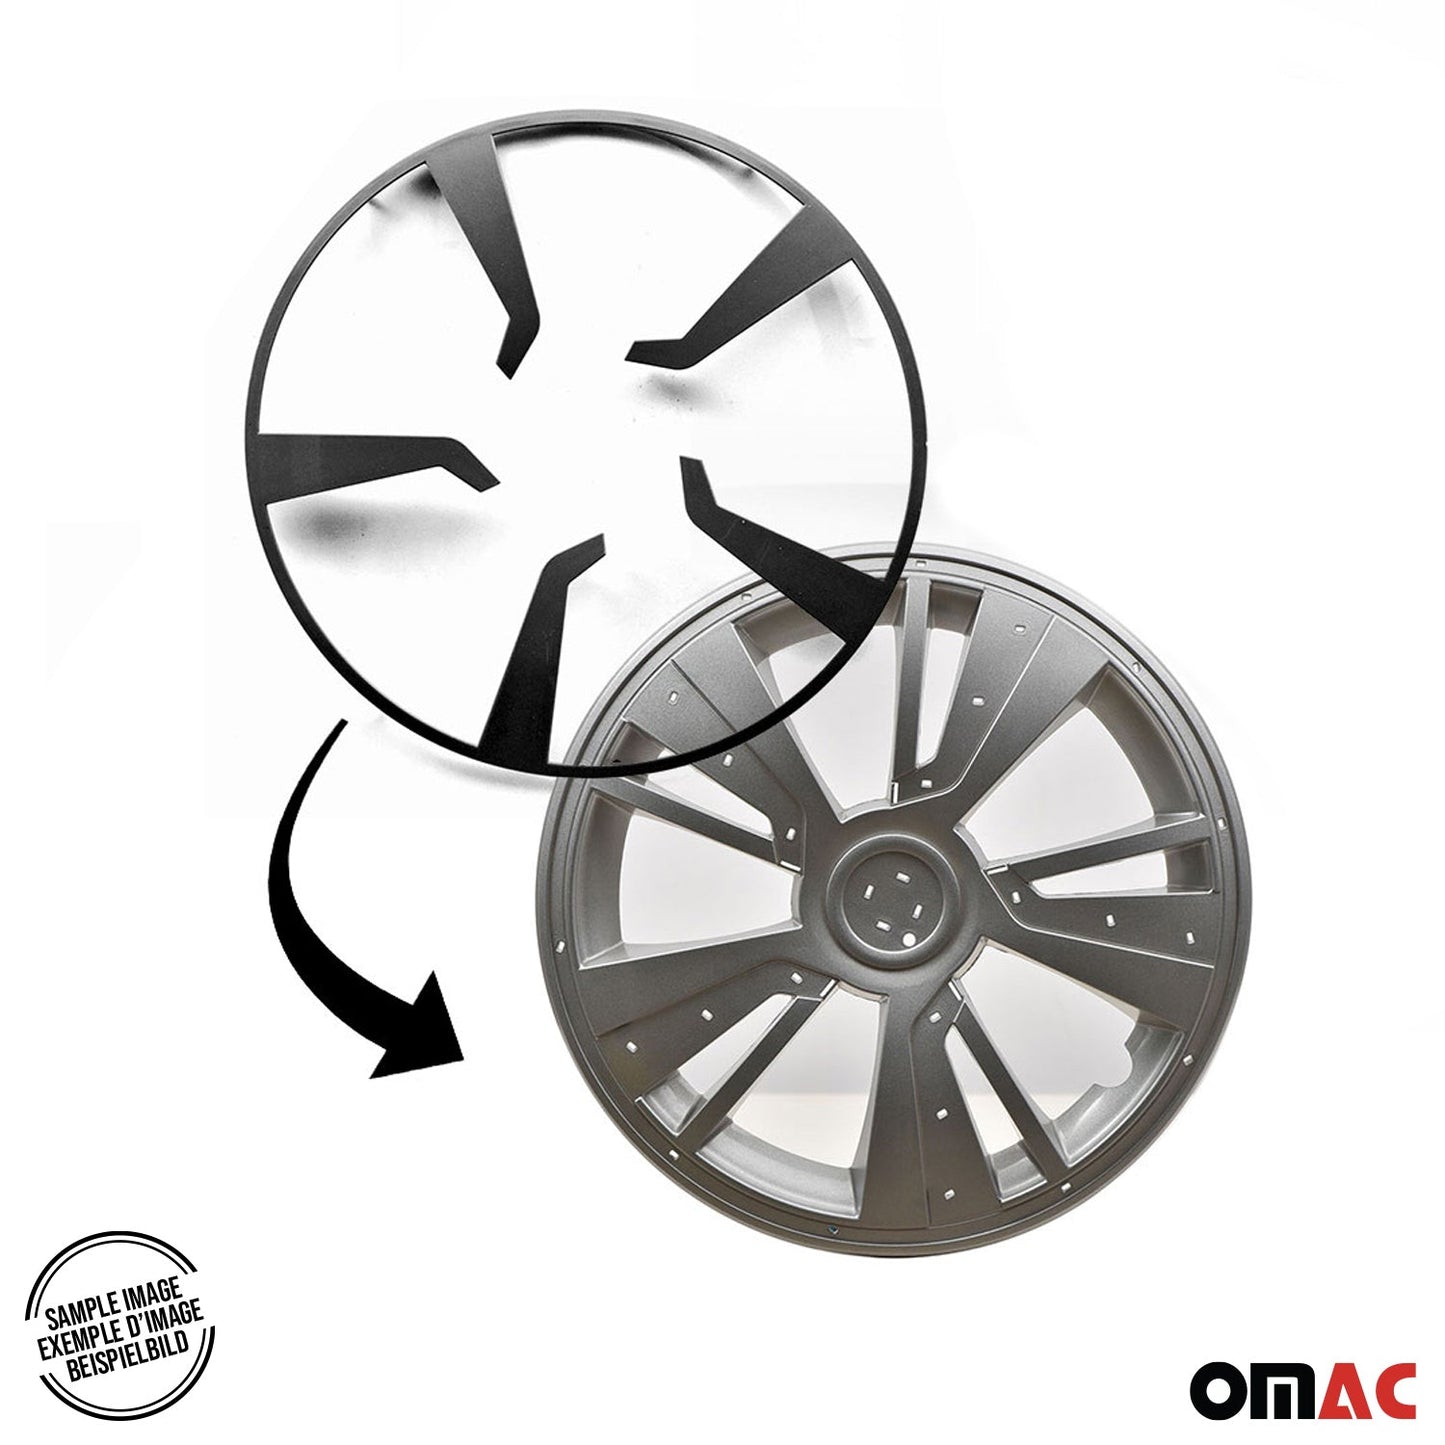 OMAC 15" Hubcaps Wheel Rim Cover Black with Dark Grey Insert 4pcs Set VRT99FR243B15DG